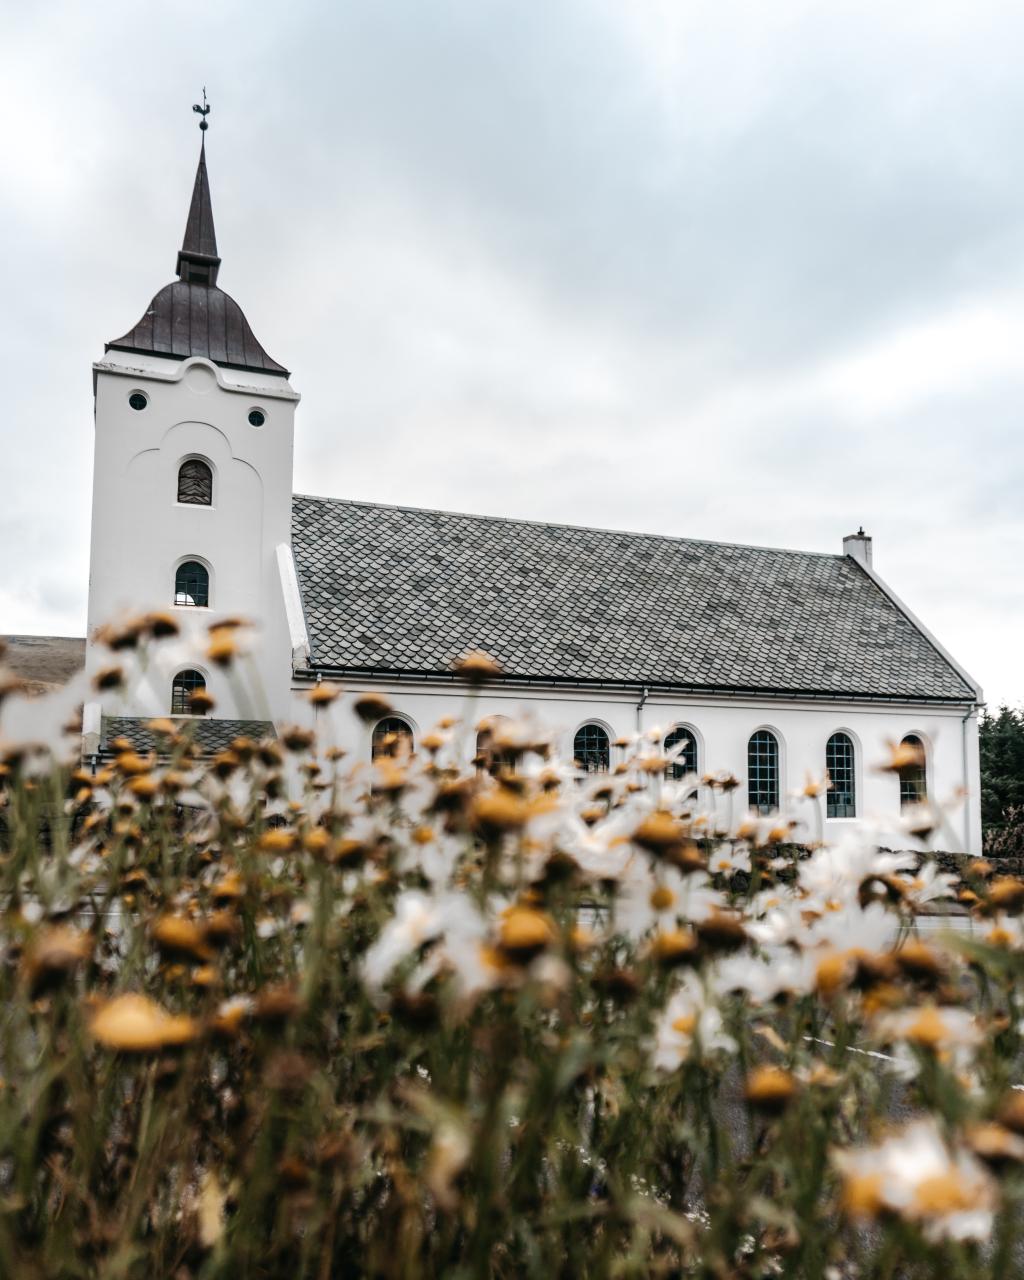 The church of Miðvágur
Image by Polina Kuzovkova